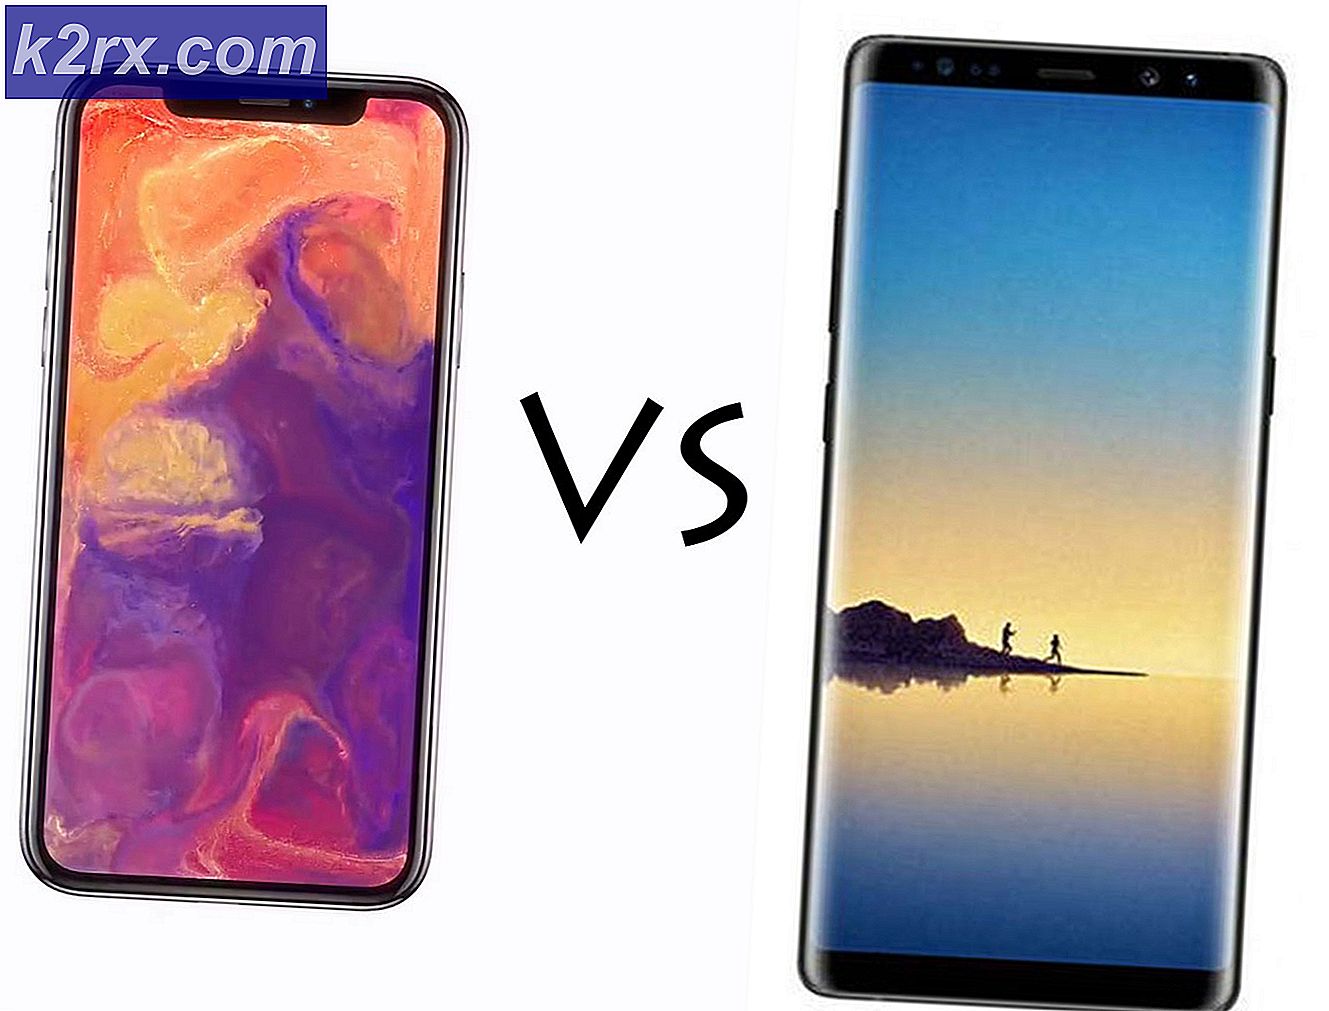 iPhone X vs Samsung Galaxy Note 8: Beauty vs Beast